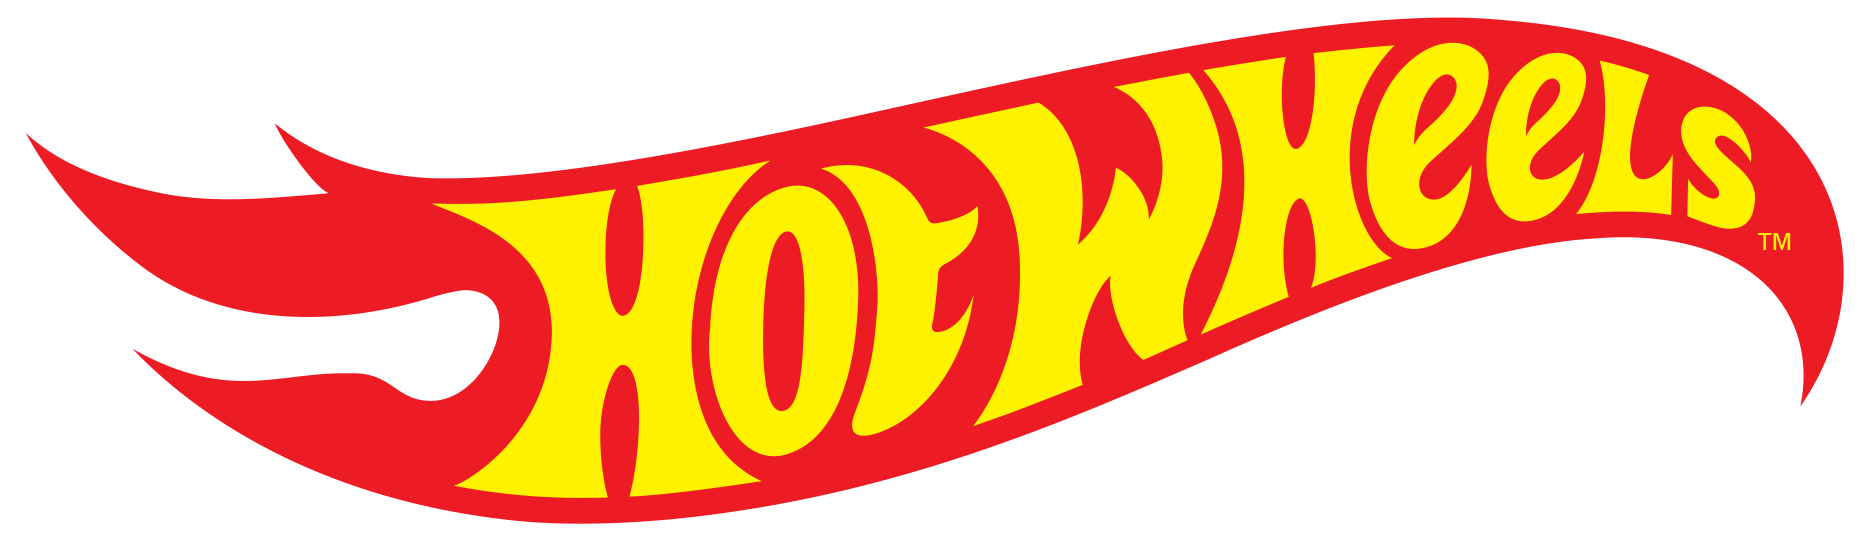 Hot Wheels Logo - Hot Wheels Logo 2017 (1861x541)